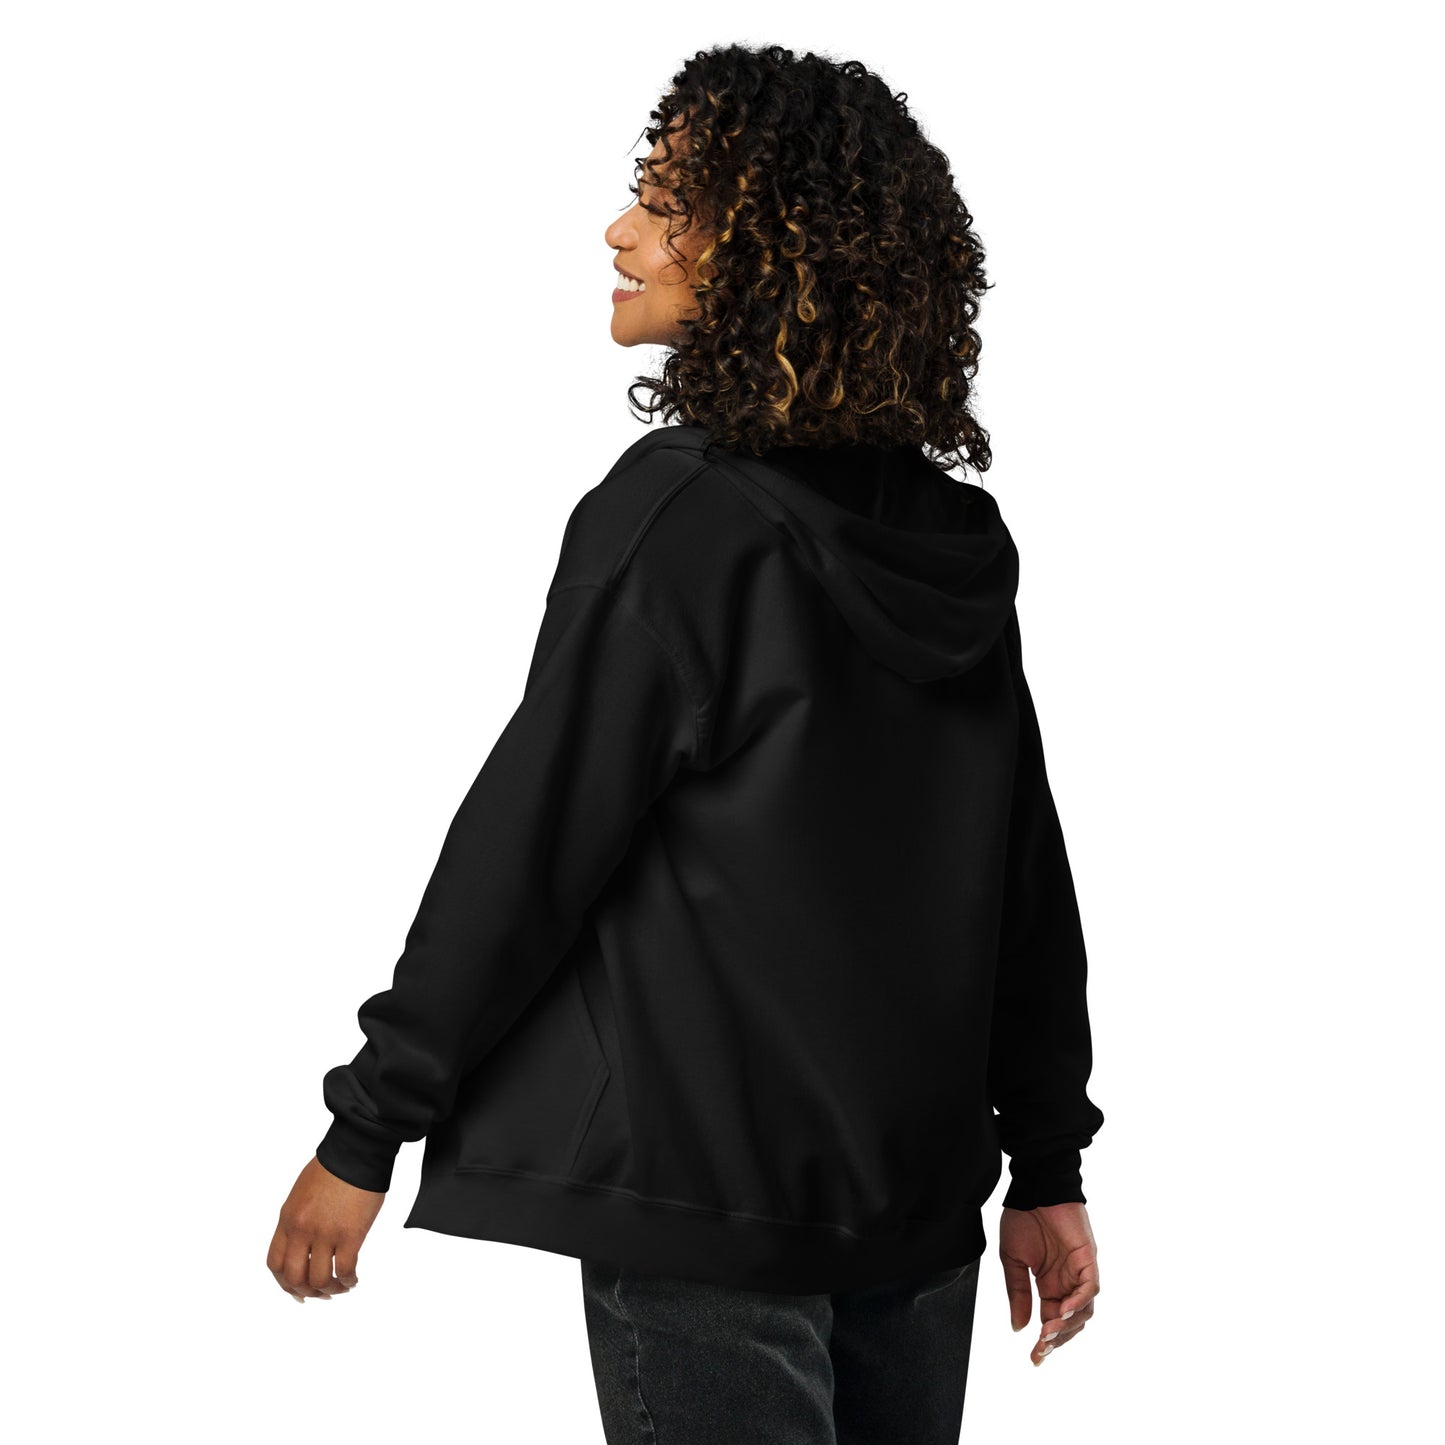 unisex heavy blend zip hoodie black for woman. Merch epic sky from ashamaluevmusic